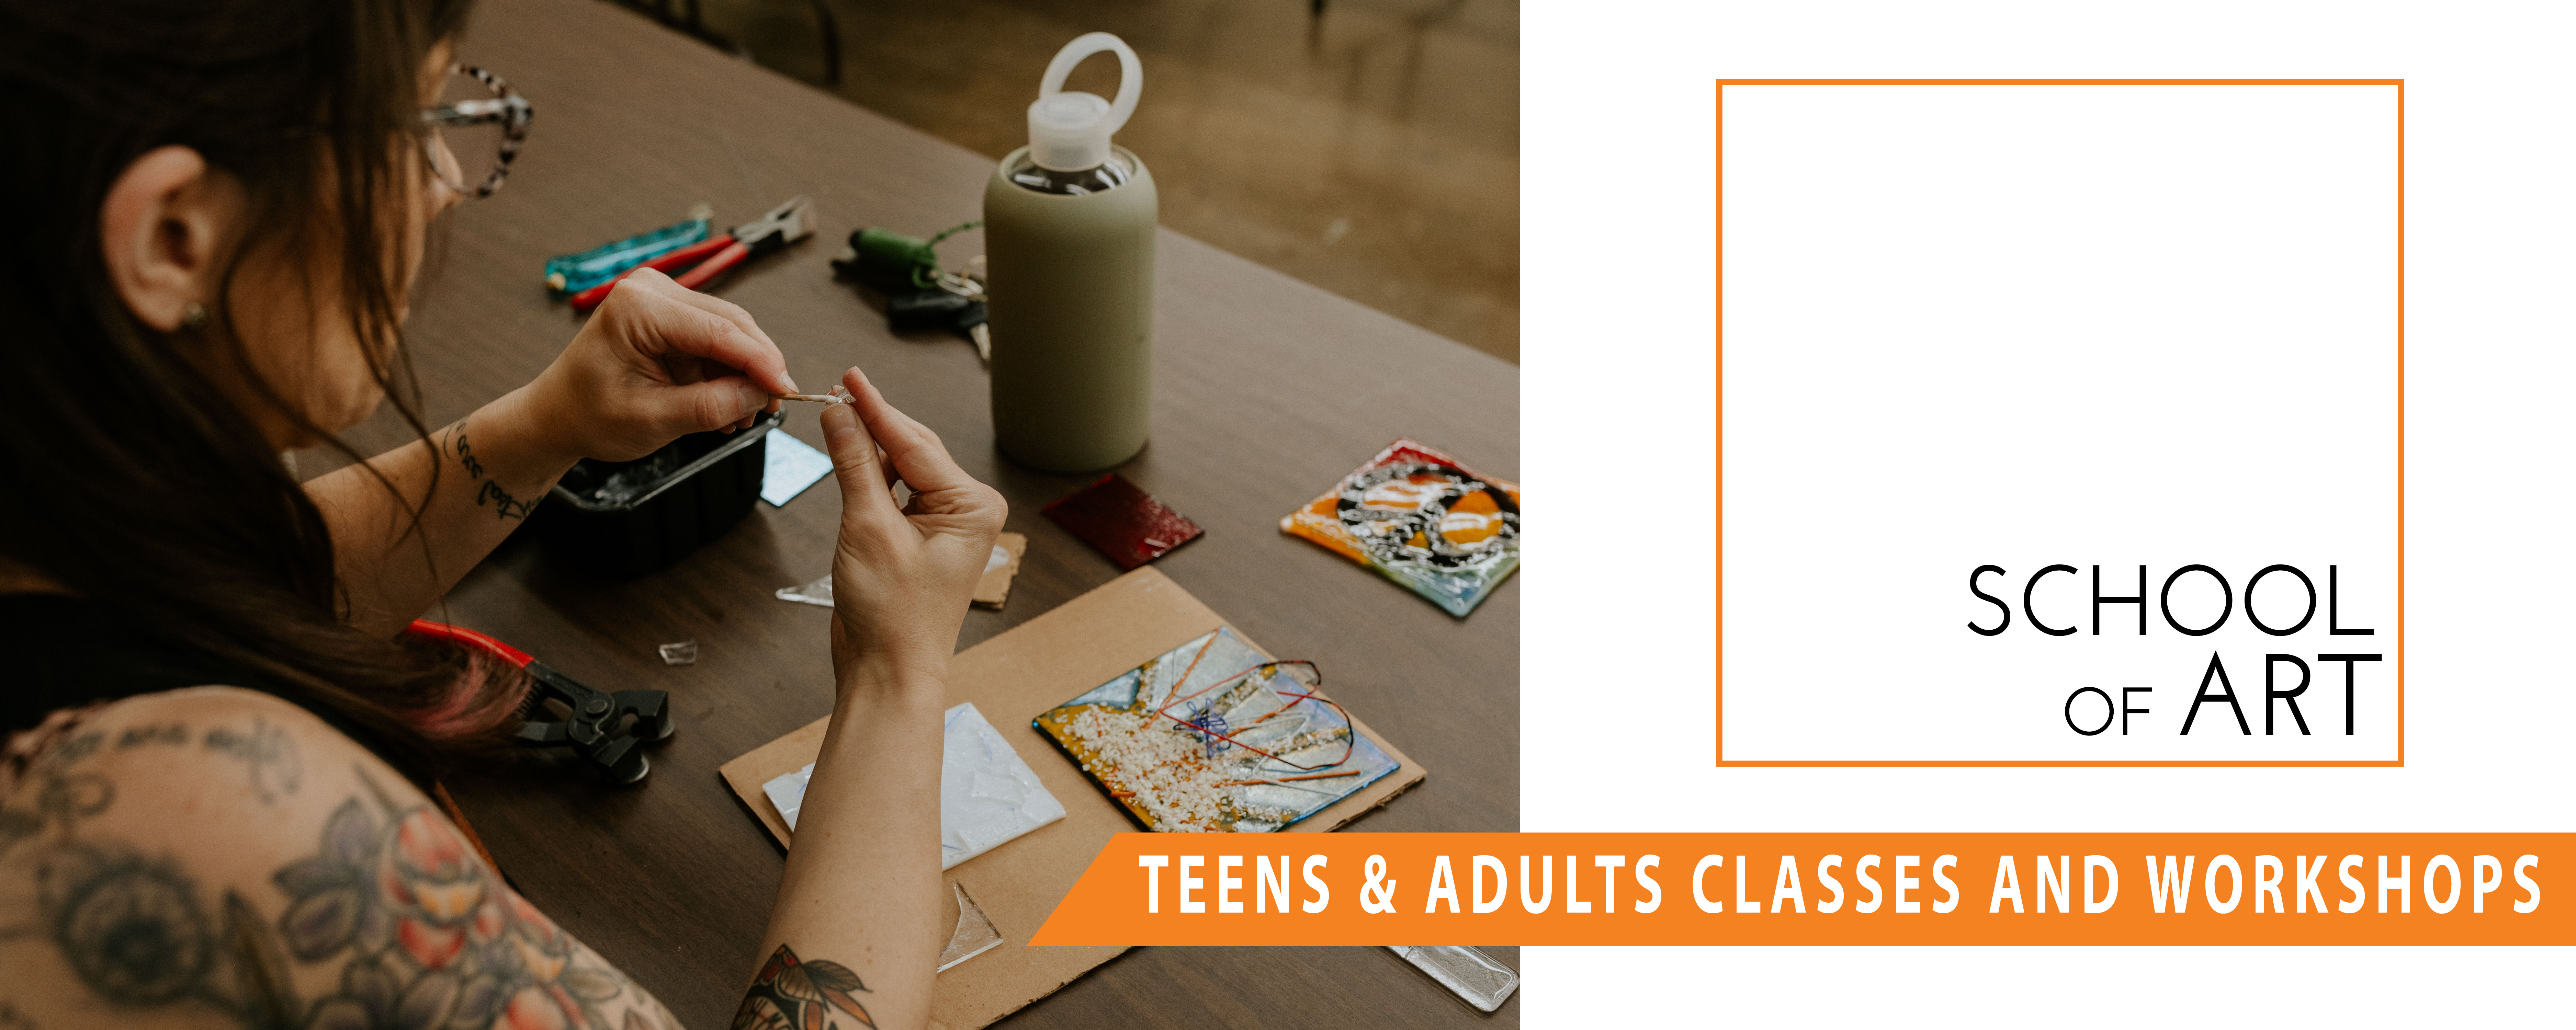 Adult & Teen Workshops & Classes